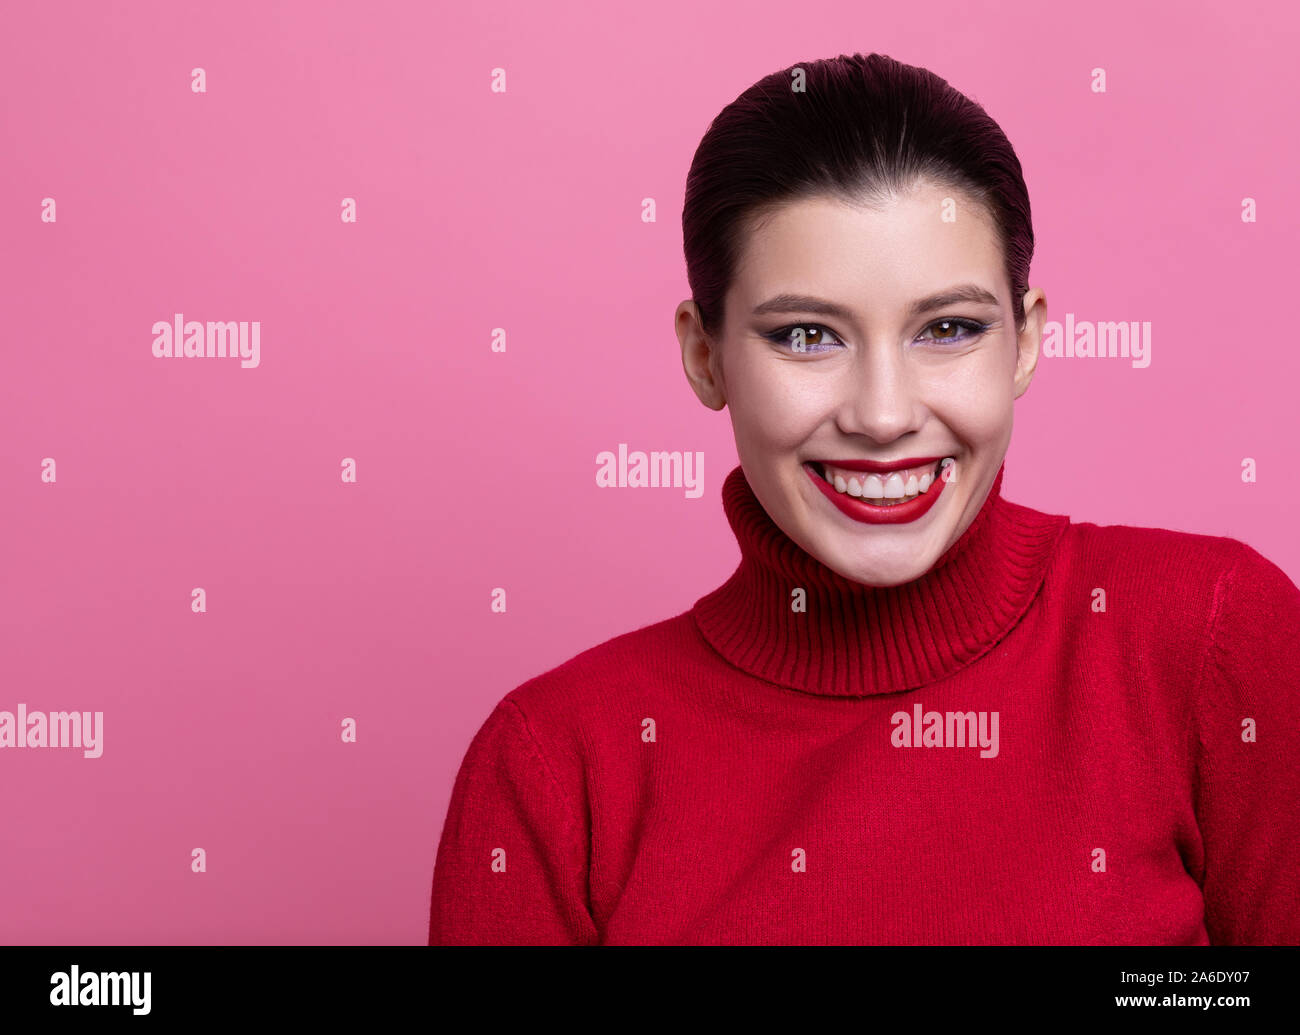 girl in red sweater posing Stock Photo